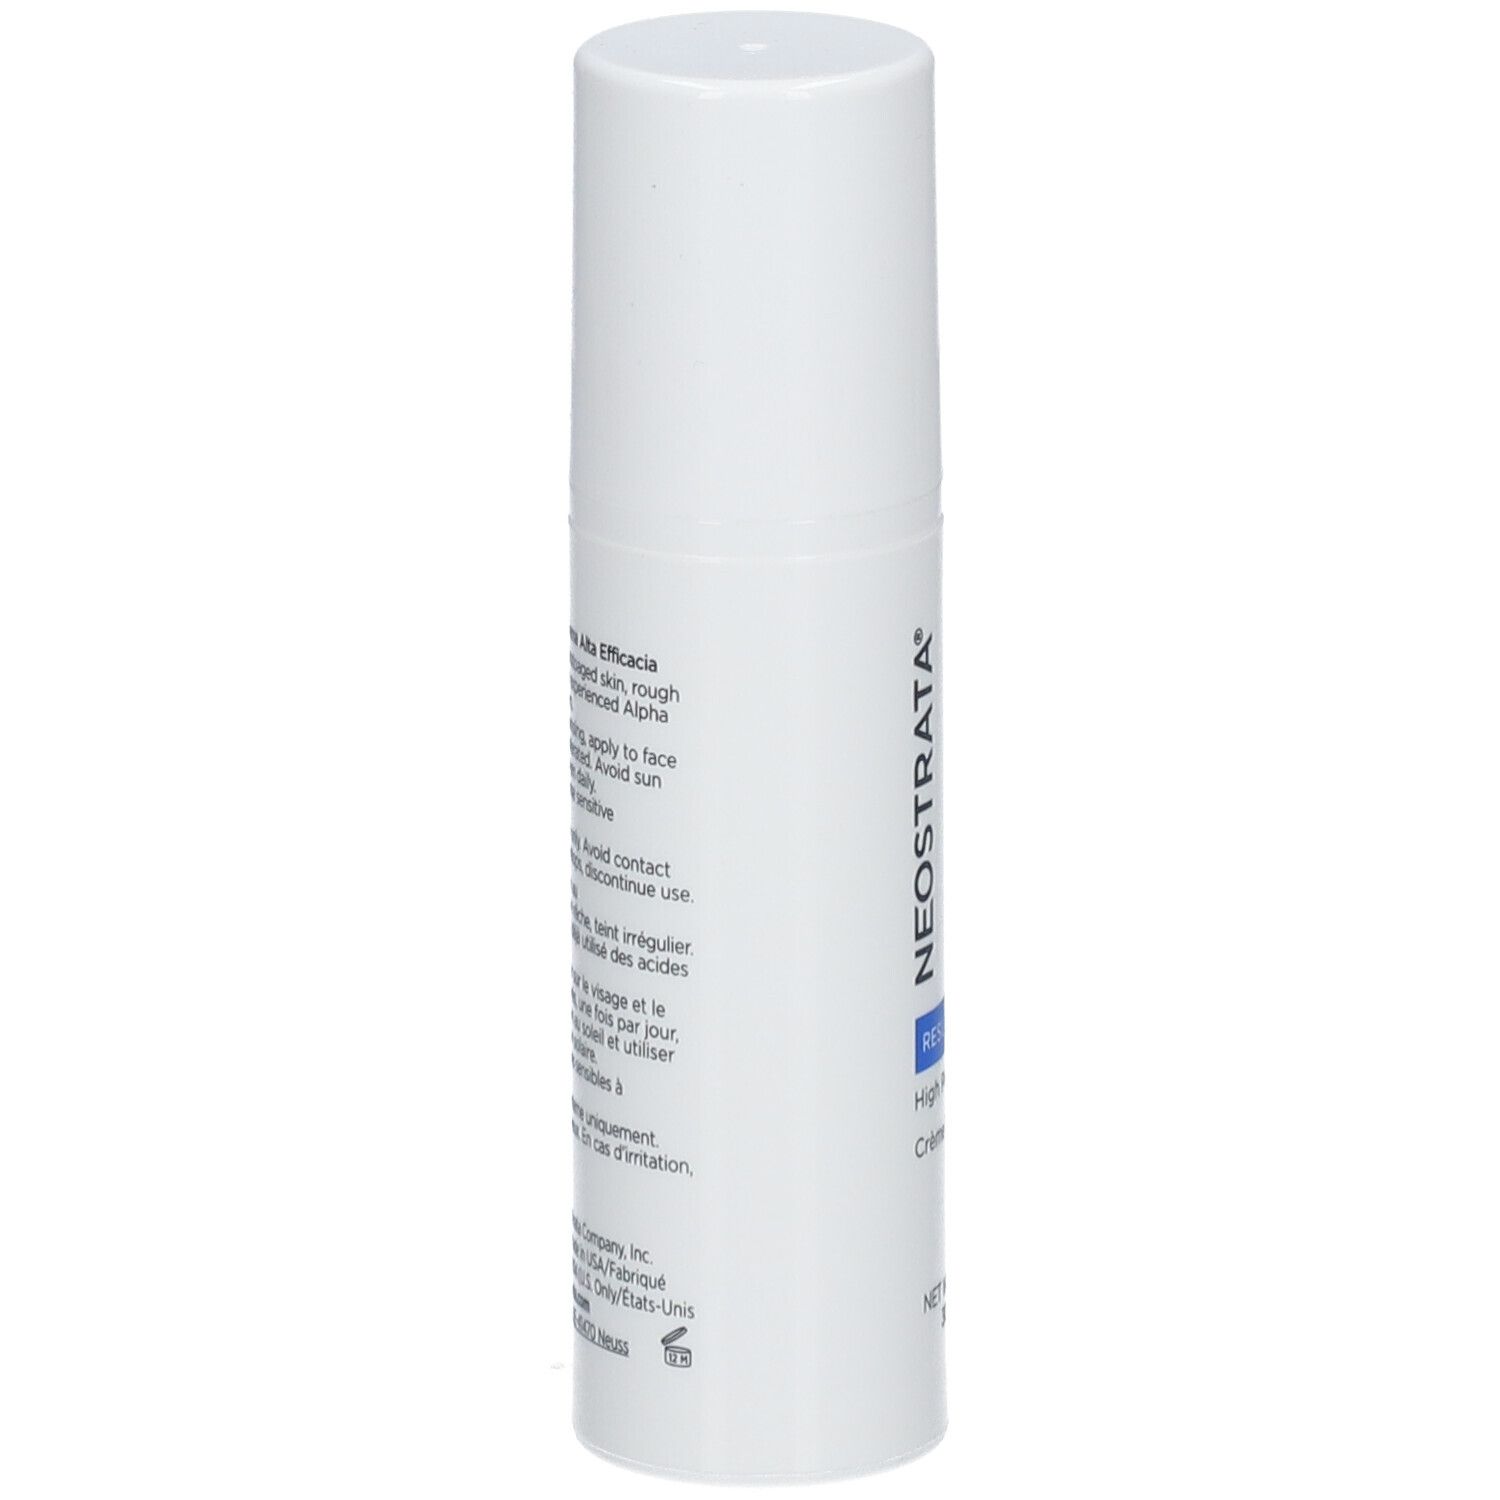 NeoStrata® Resurface High Potency Cream 20 AHA